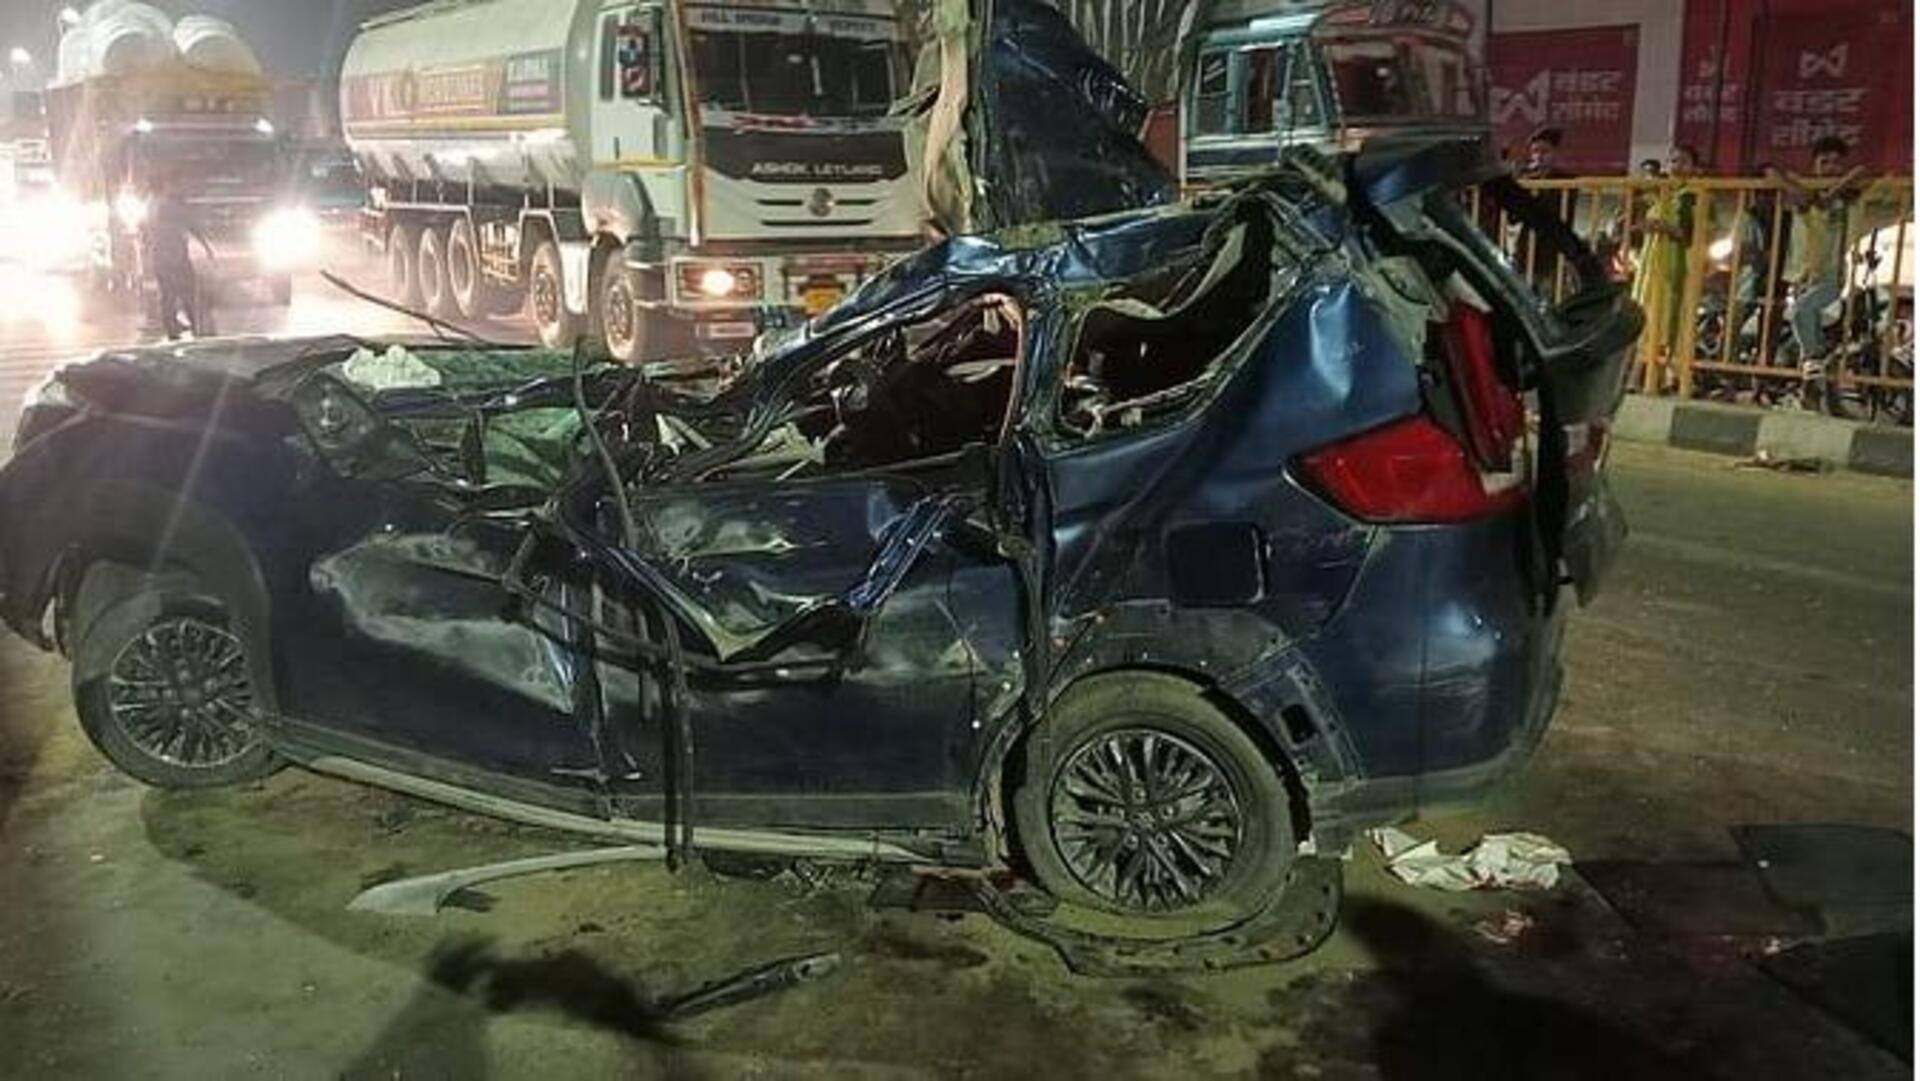 Road Accident: హాపూర్‌లో ఘోర ప్రమాదం.. అదుపుతప్పి డివైడర్ ను ఢీకొట్టిన కారు.. ఆరుగురు మృతి 